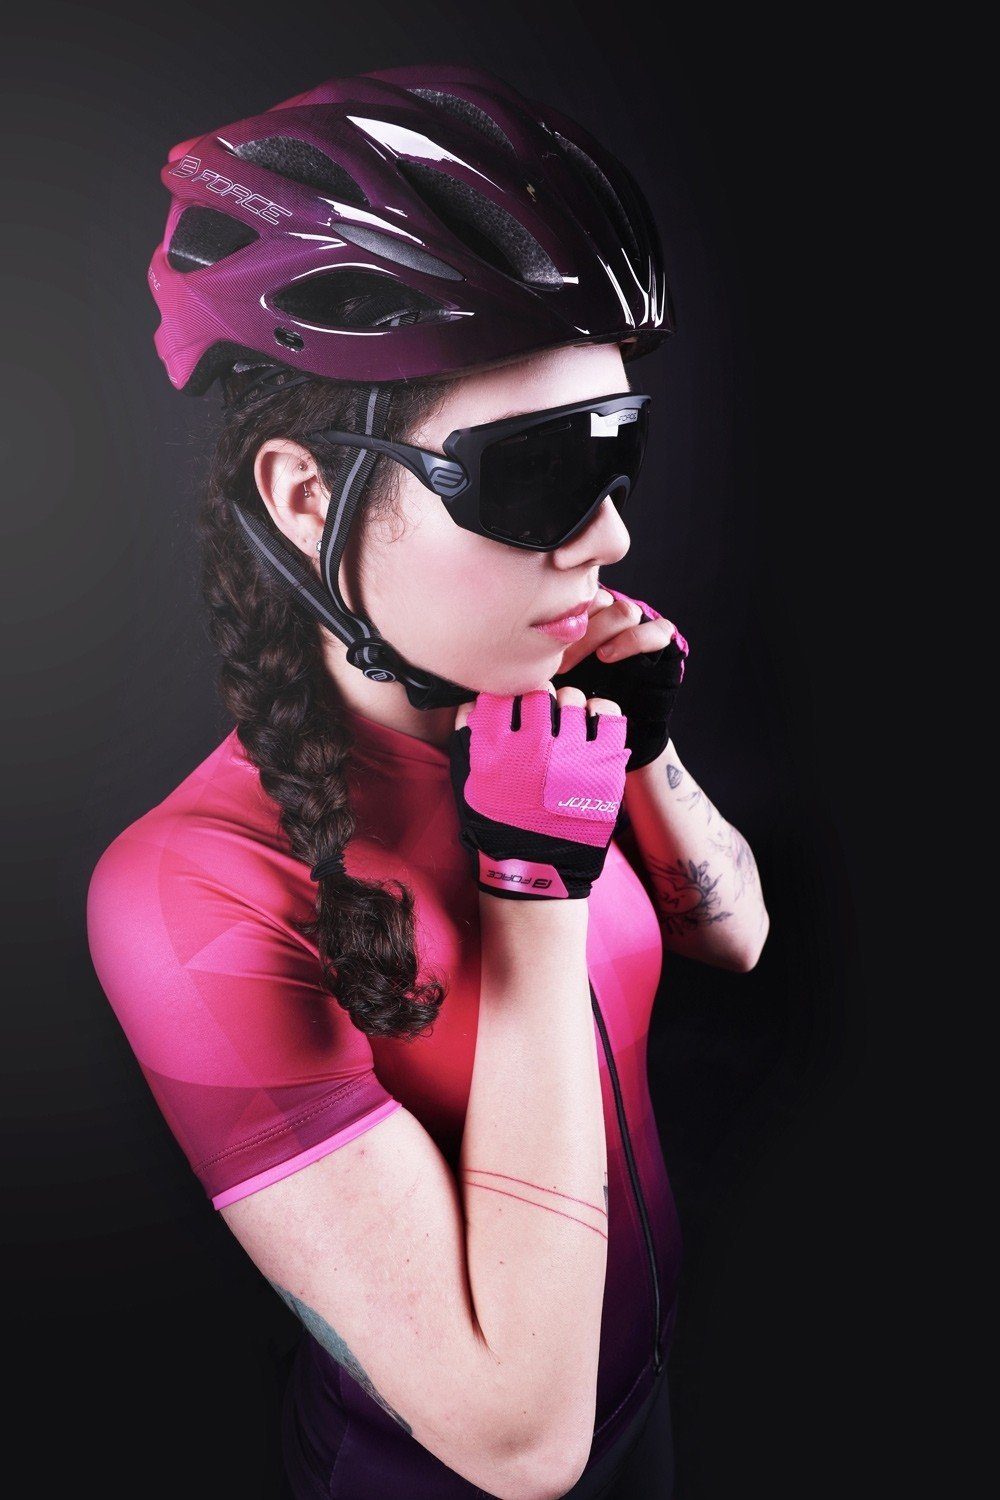 SECTOR Fahrradhandschuhe FORCE LADY Handschuhe FORCE pink-schwarz